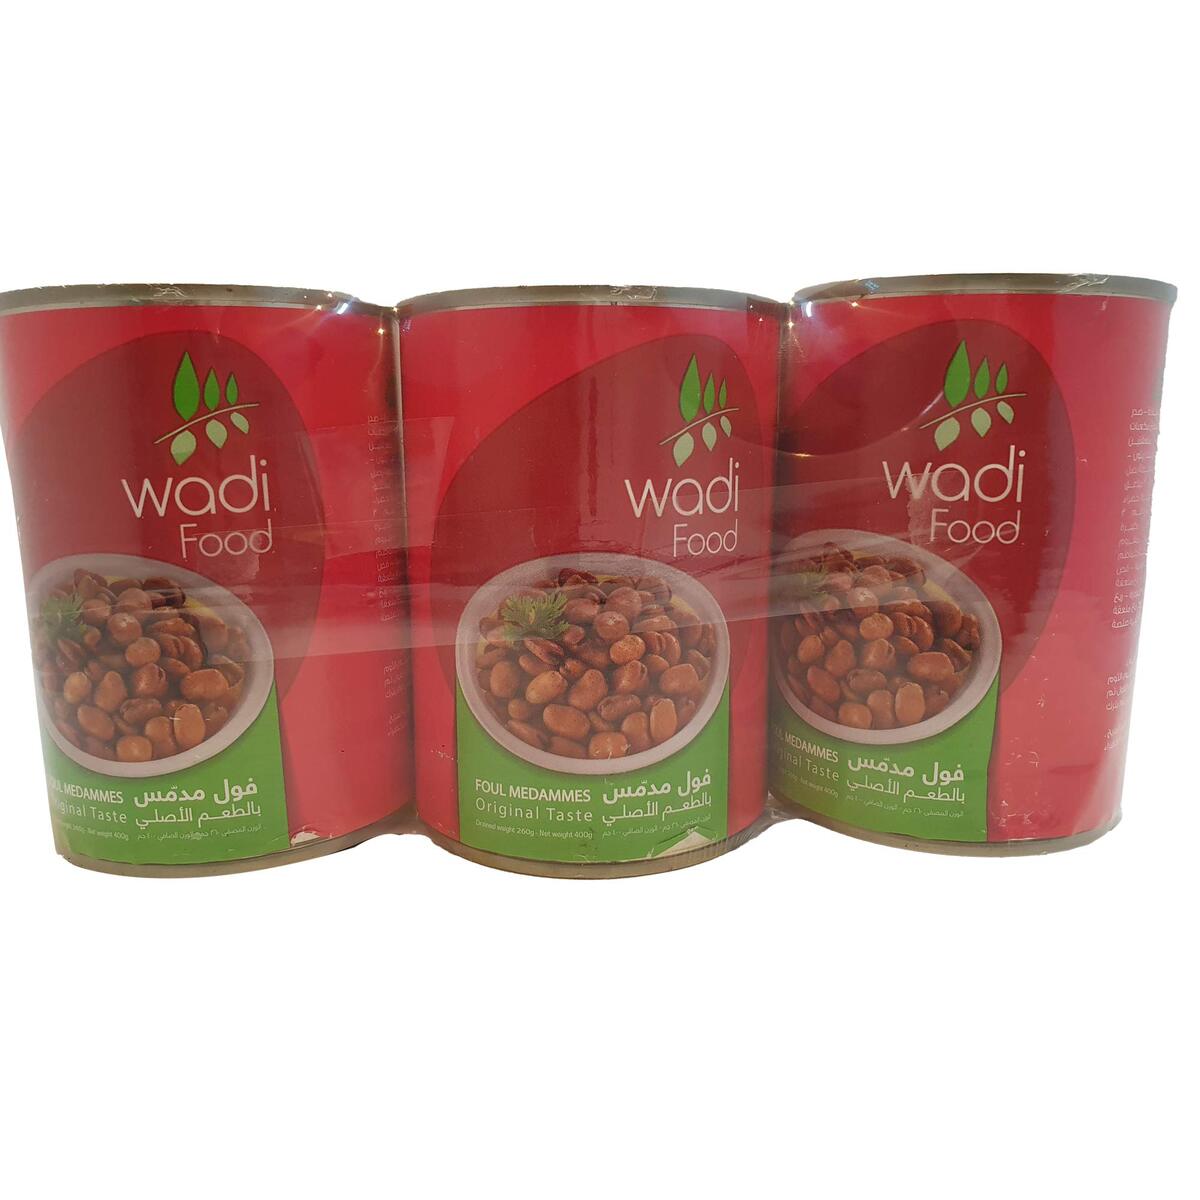 Wadi Food  Foul Medammes  Value Pack  3 x 400g